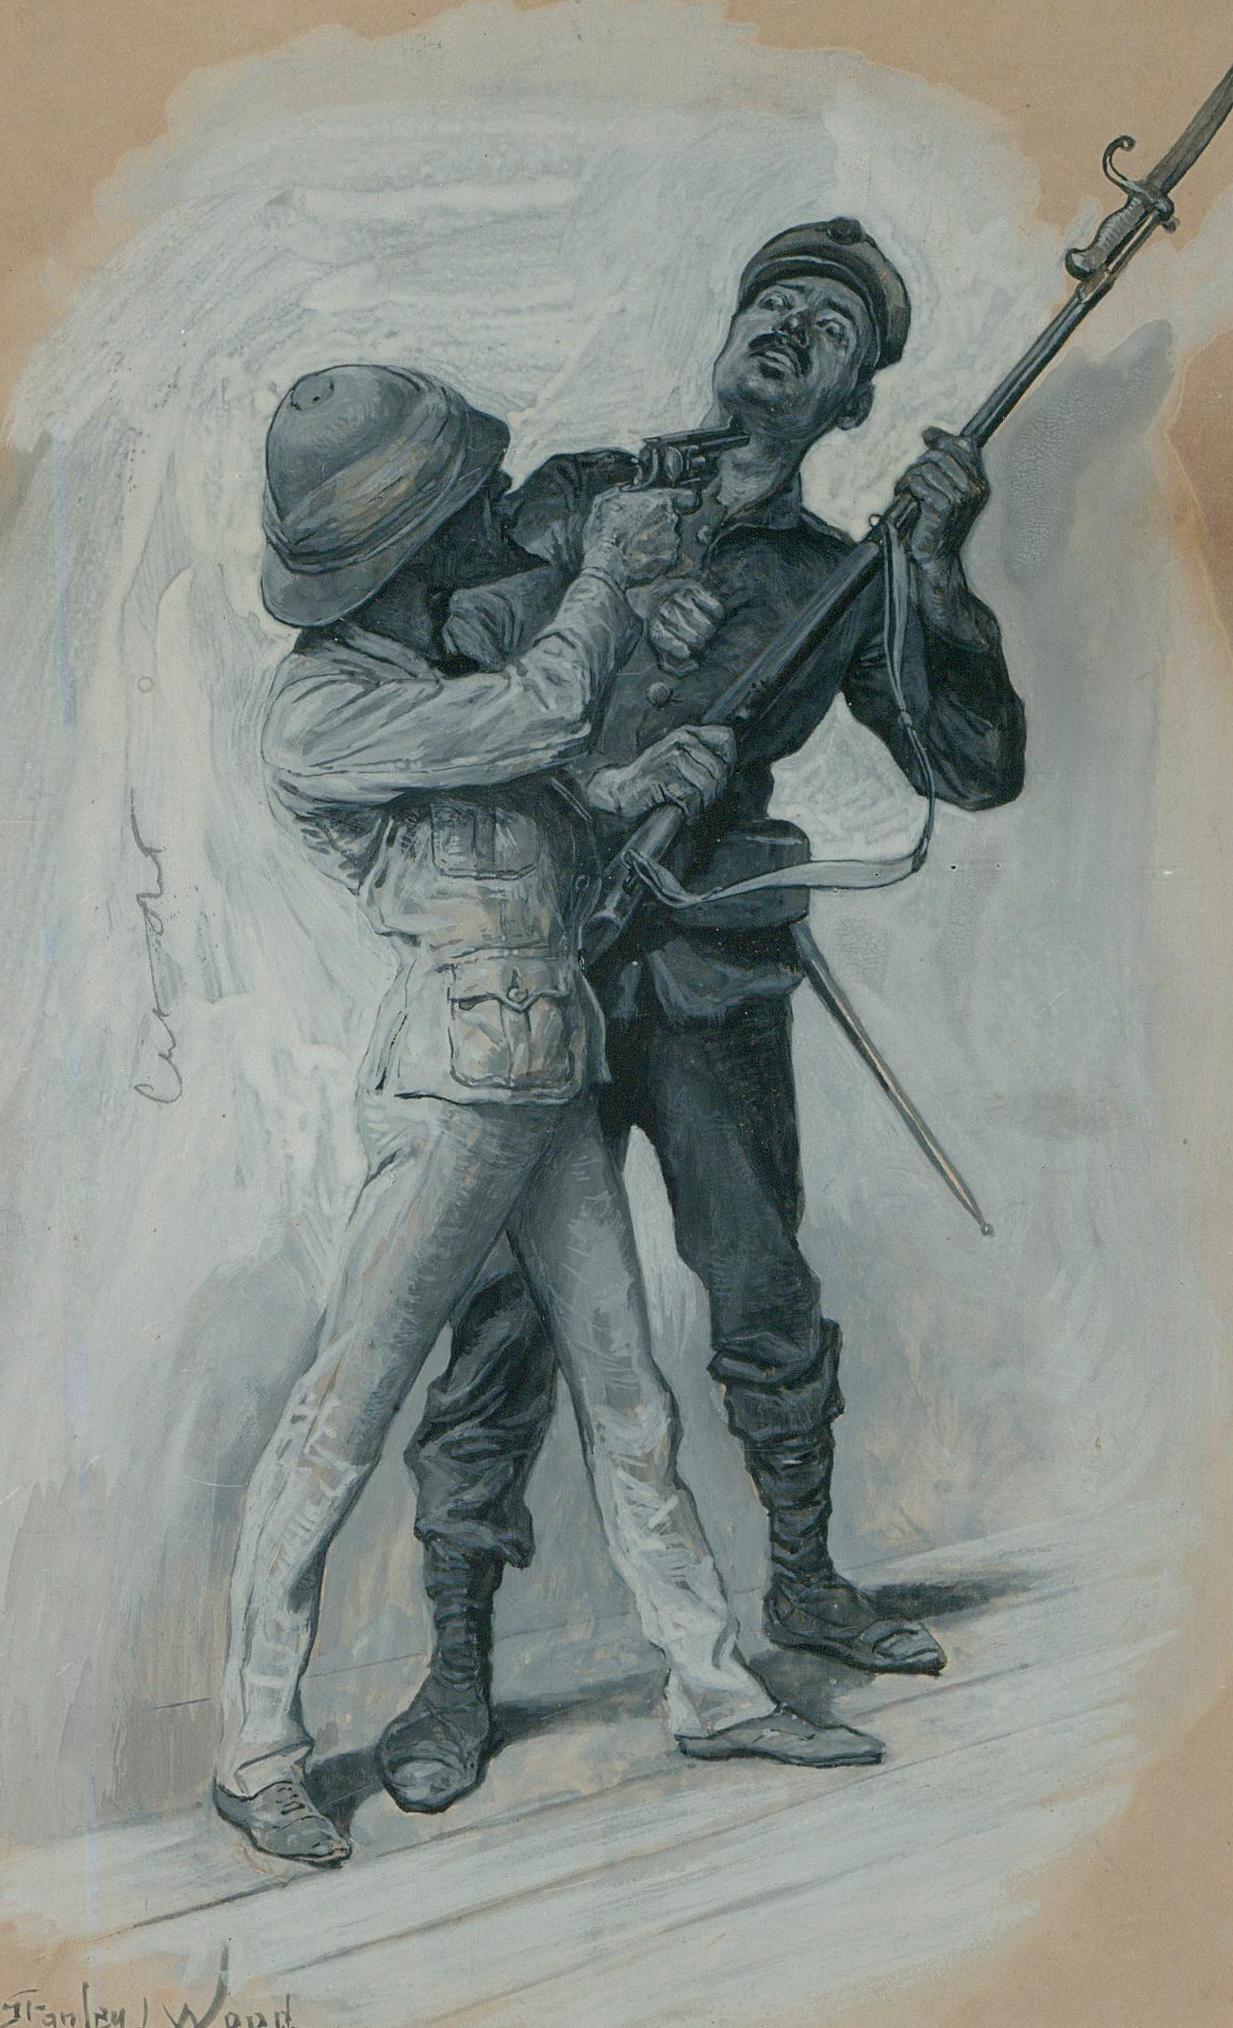 Stanley Llewellyn Wood (1866-1928) - Late 19th Century Gouache, Surrender! - Art by Stanley L. Wood